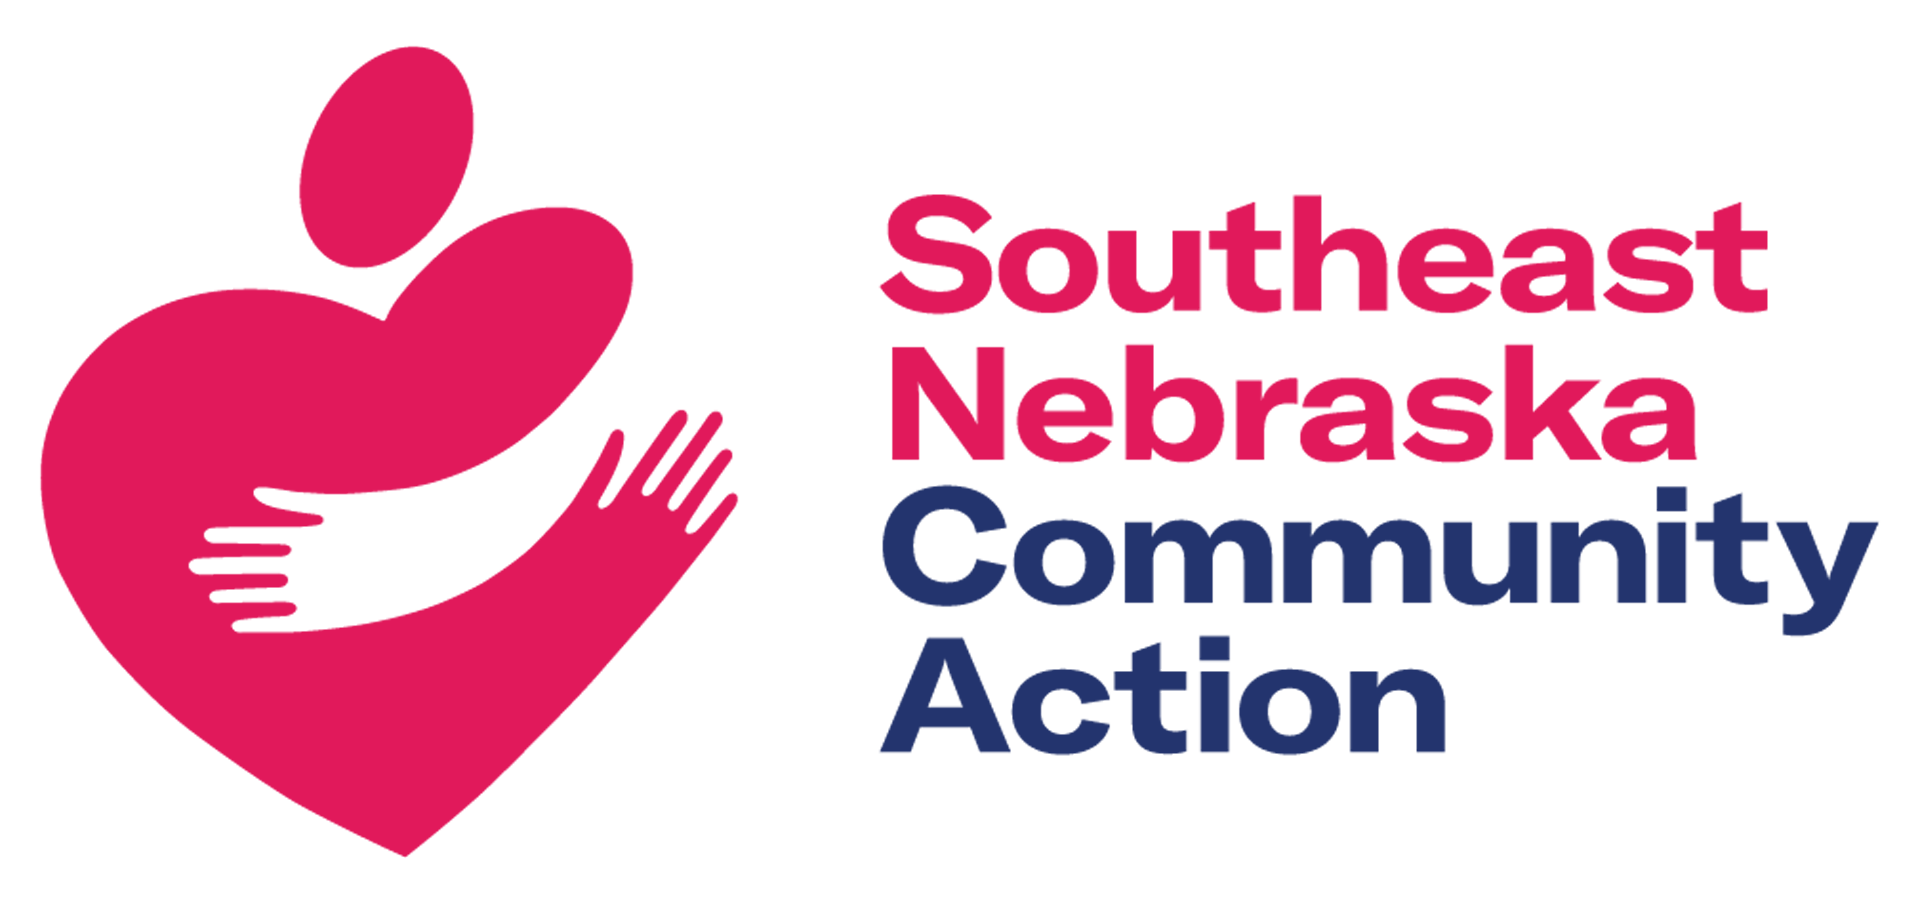 SENCA Southeast Nebraska Community Action Network pic